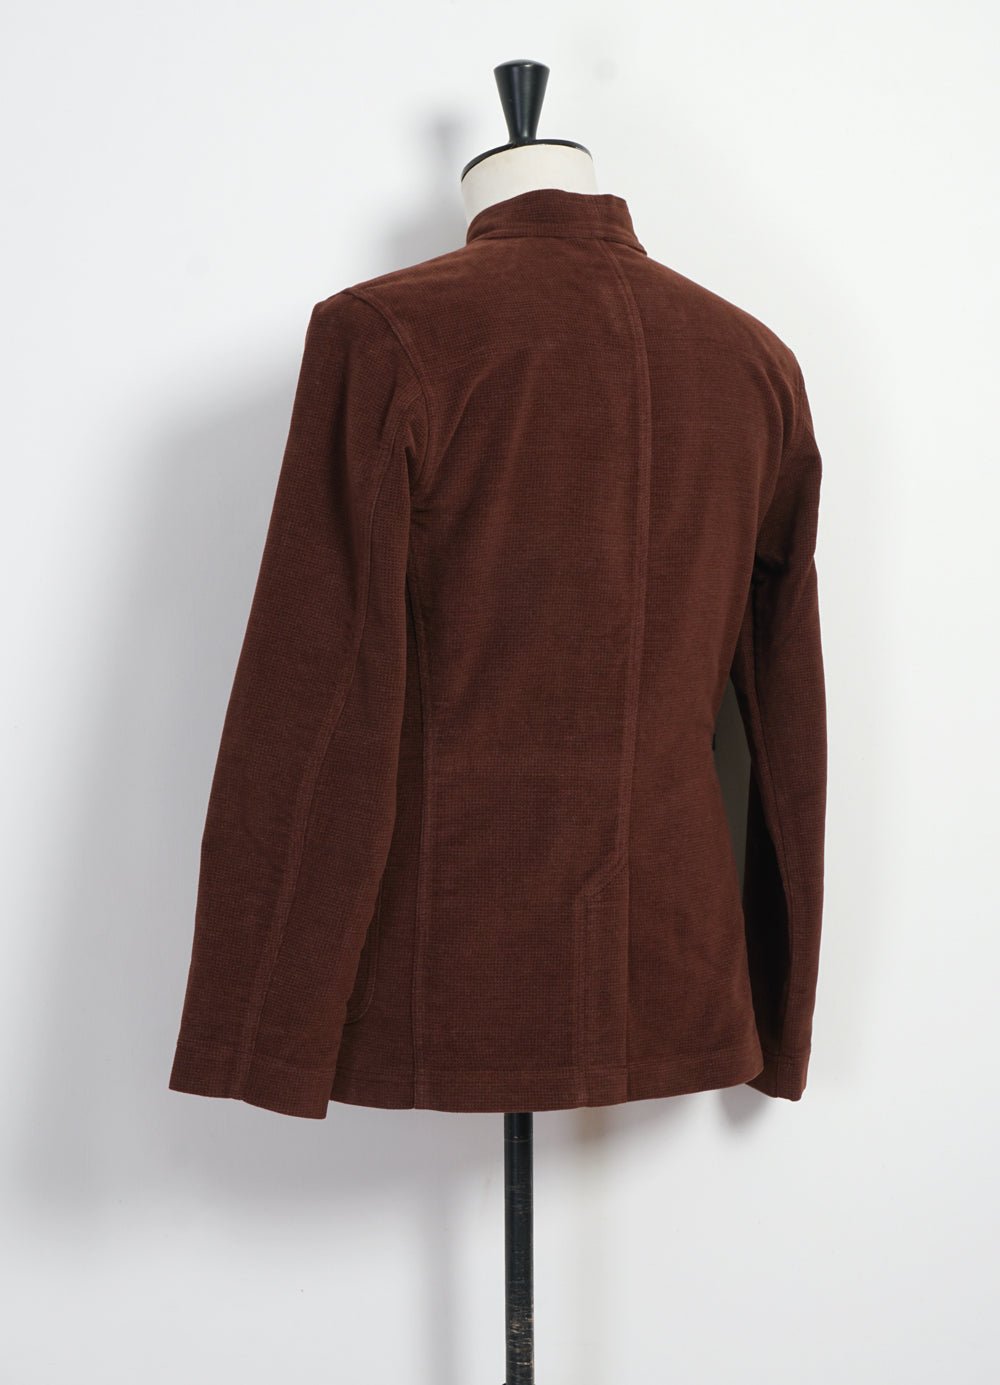 HANSEN GARMENTS - FOLKE | Scarecrow's Jacket | Ruby - HANSEN Garments